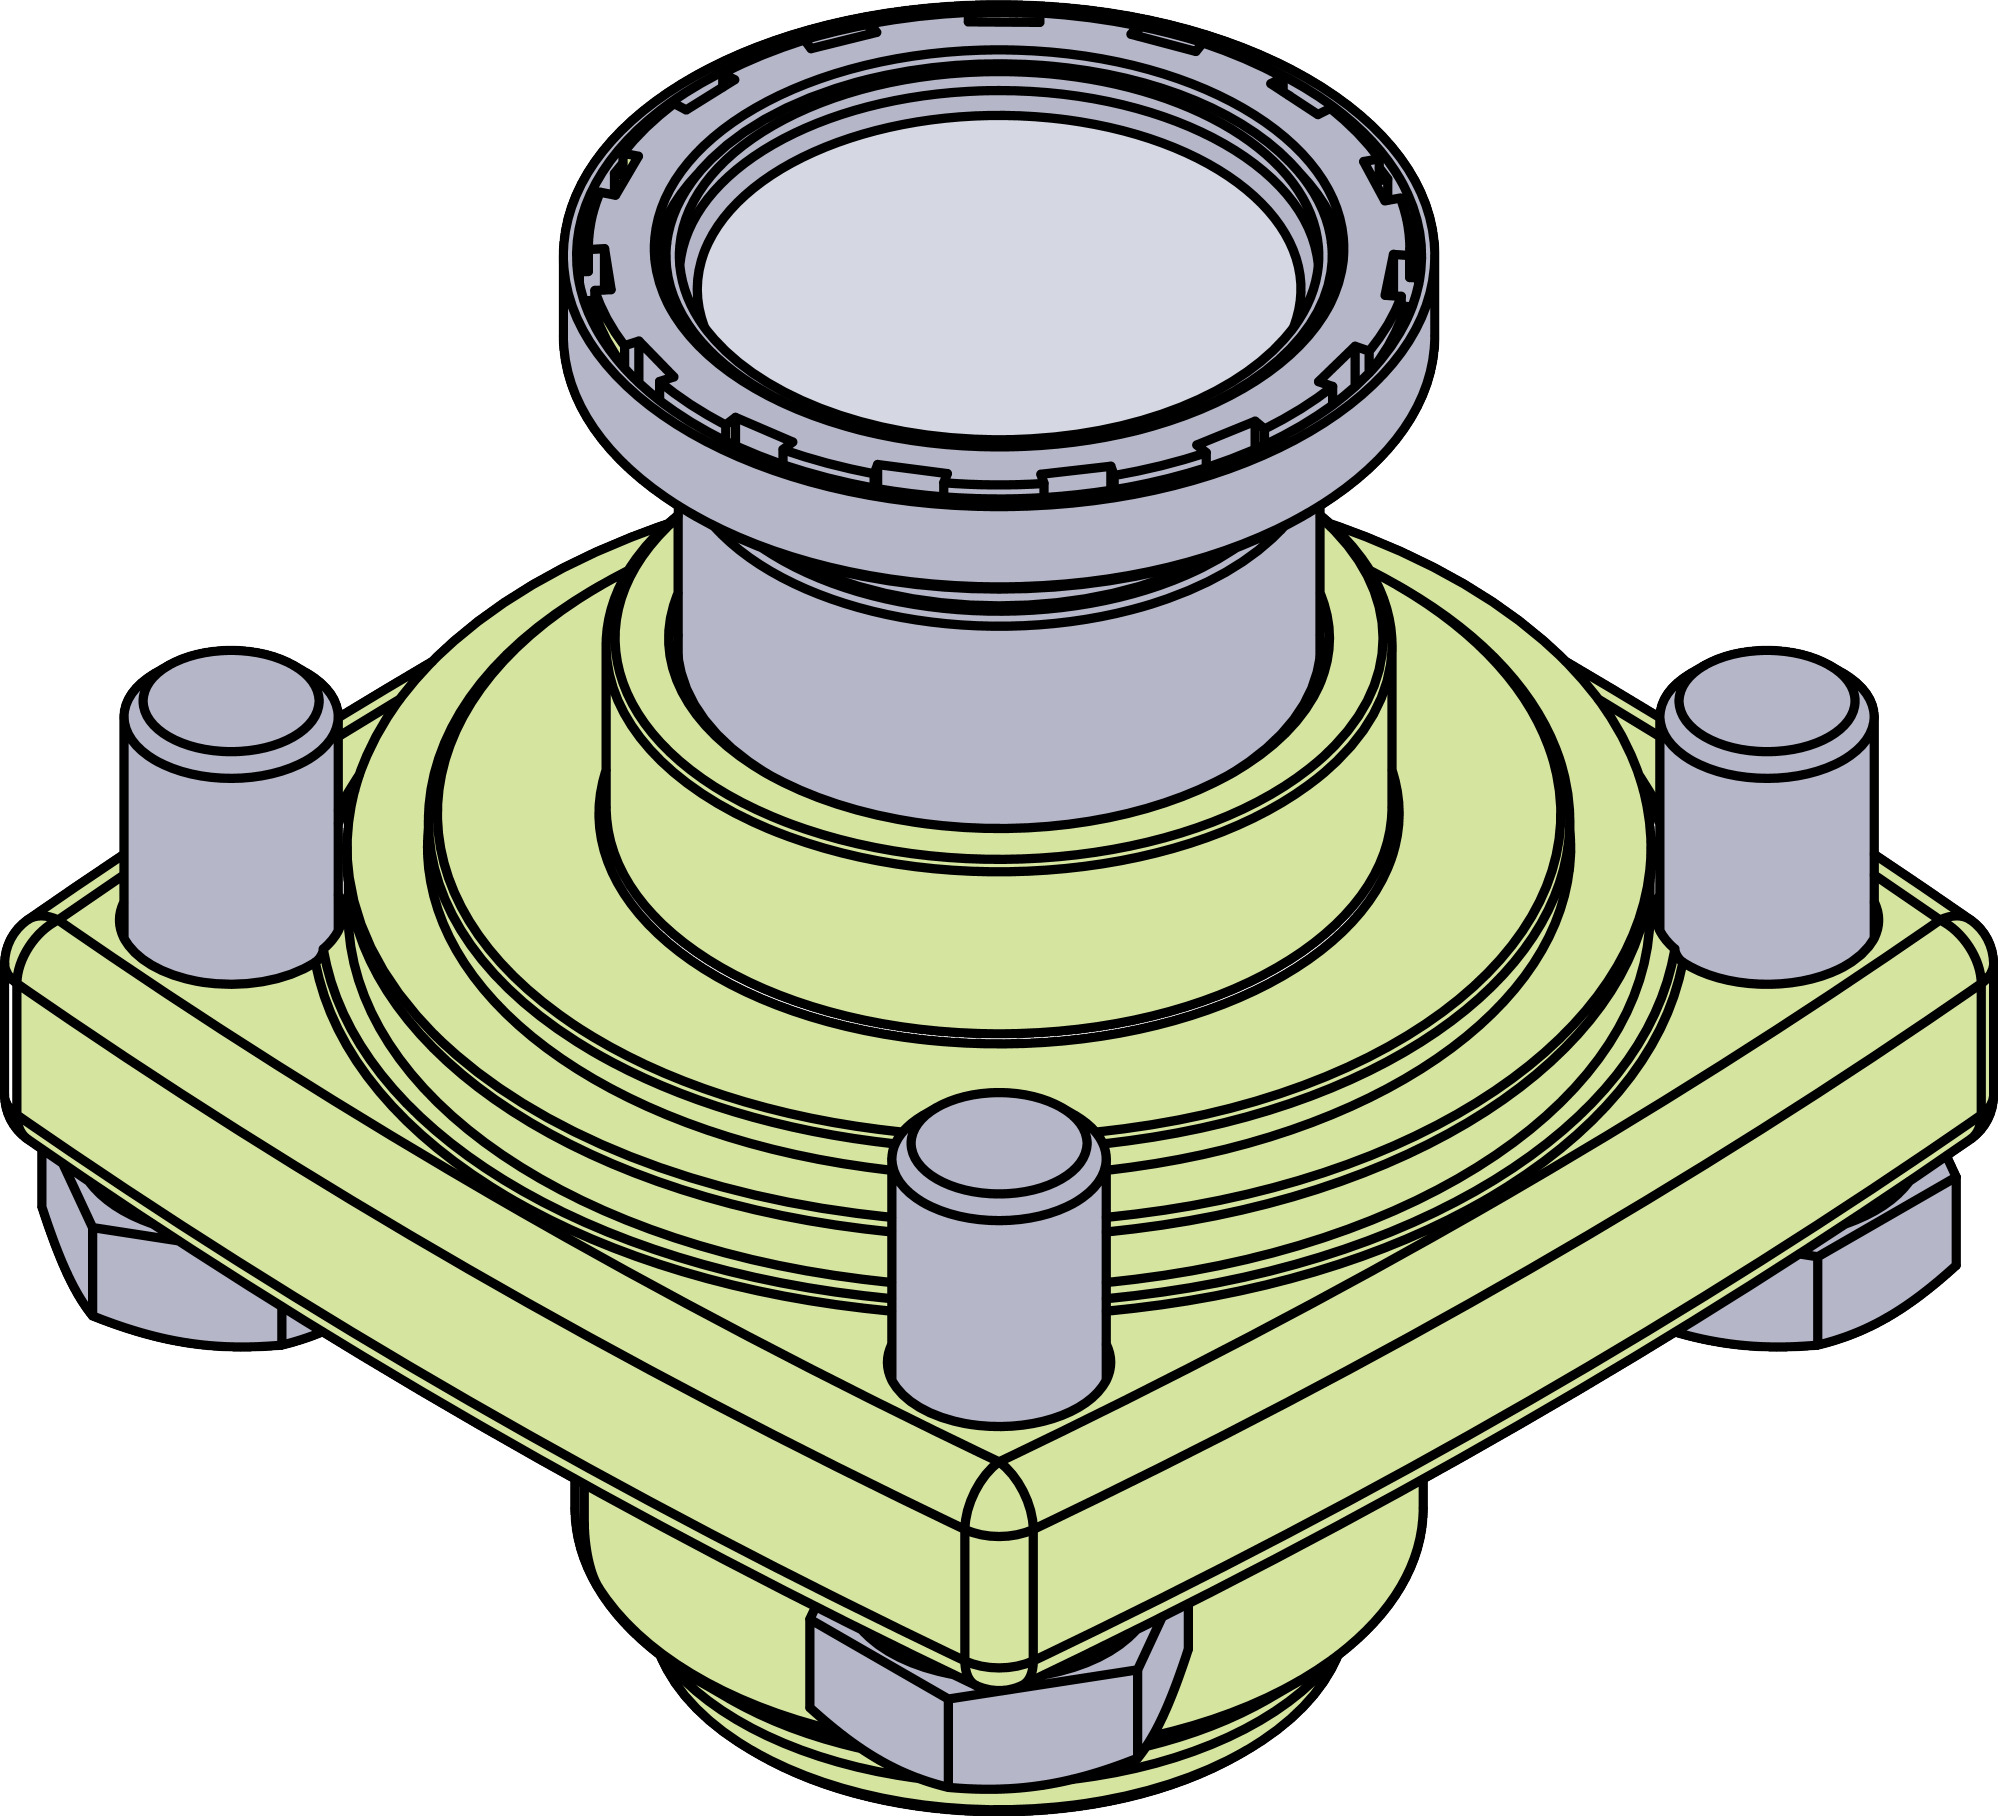 ICFC 25 - 40, Check valve module